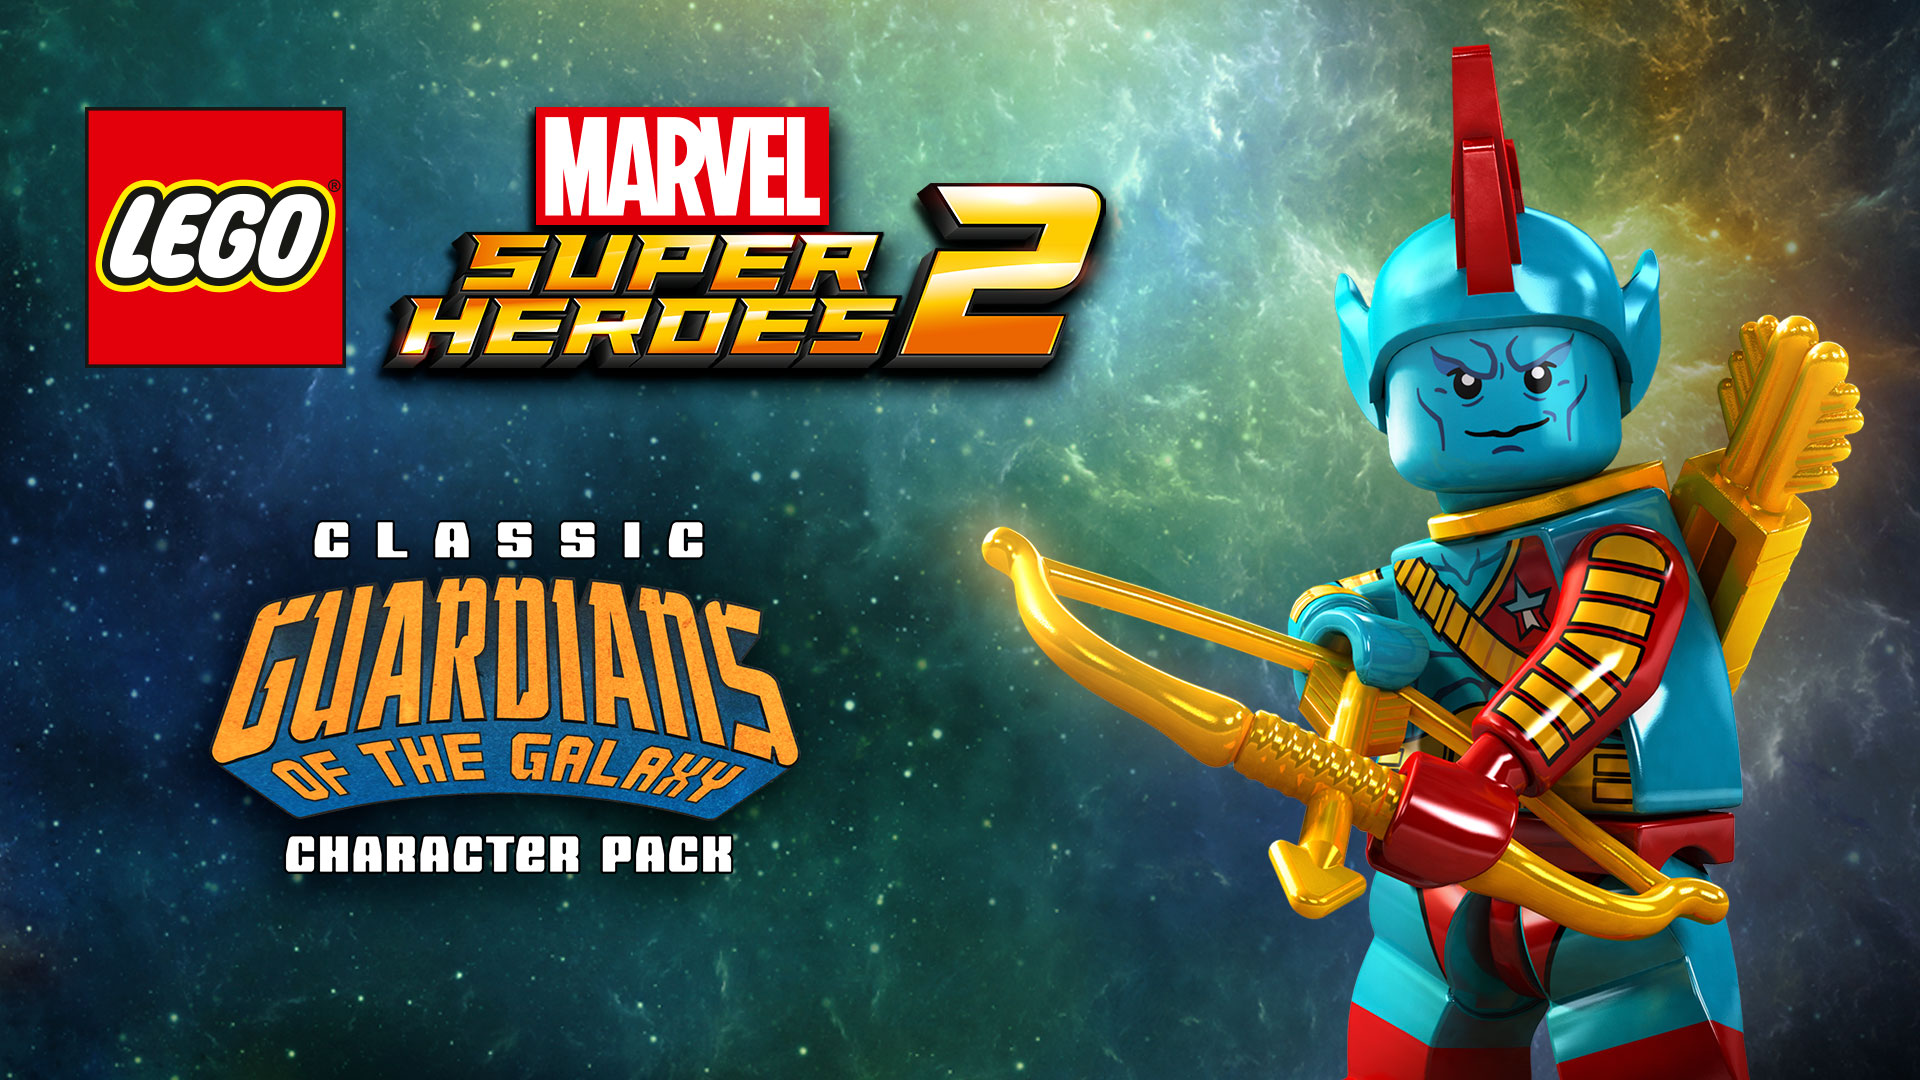 LEGO Marvel Superheroes 2 Season Pass Level DLC Packs - Avengers Infinity  War, Black Panther, & More 